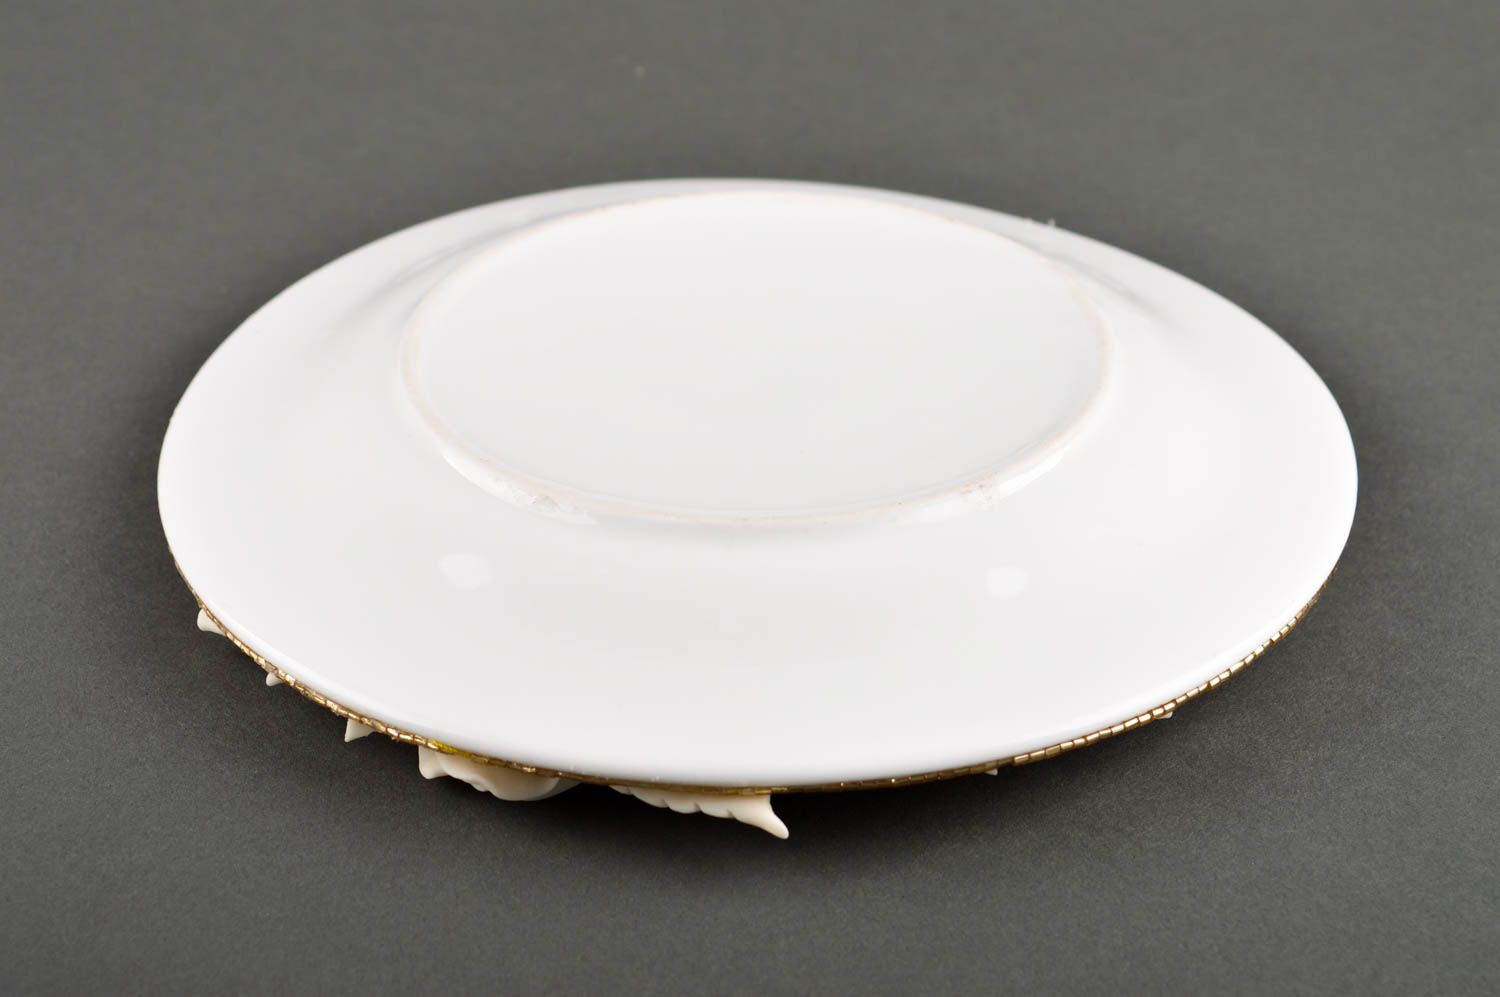 Handmade beautiful festive plate designer unusual ware decorative use only photo 5